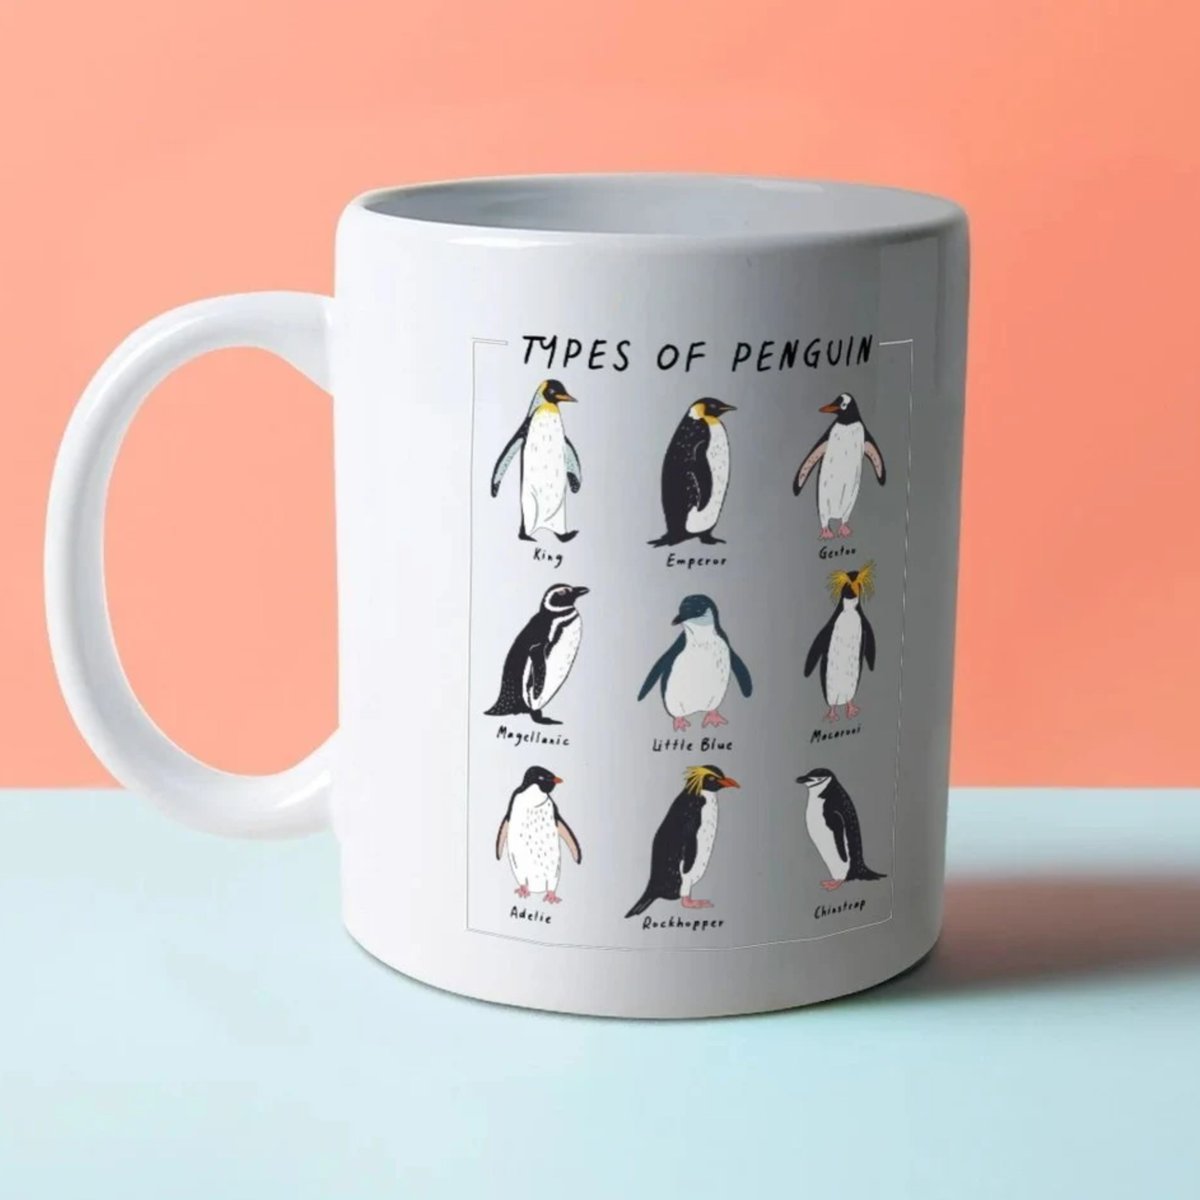 **NEW** perfect for Penguin Lovers! 🐧🐧🐧 spiritanimalclothing.co.uk/product/cerami…

#penguin #penguins #penguinlover #mugs #cutemugs #animallover #inspiredbynature #spiritanimal #ecofriendlygifts #sustainablegifts #gifts #ceramicmugs #giftideas